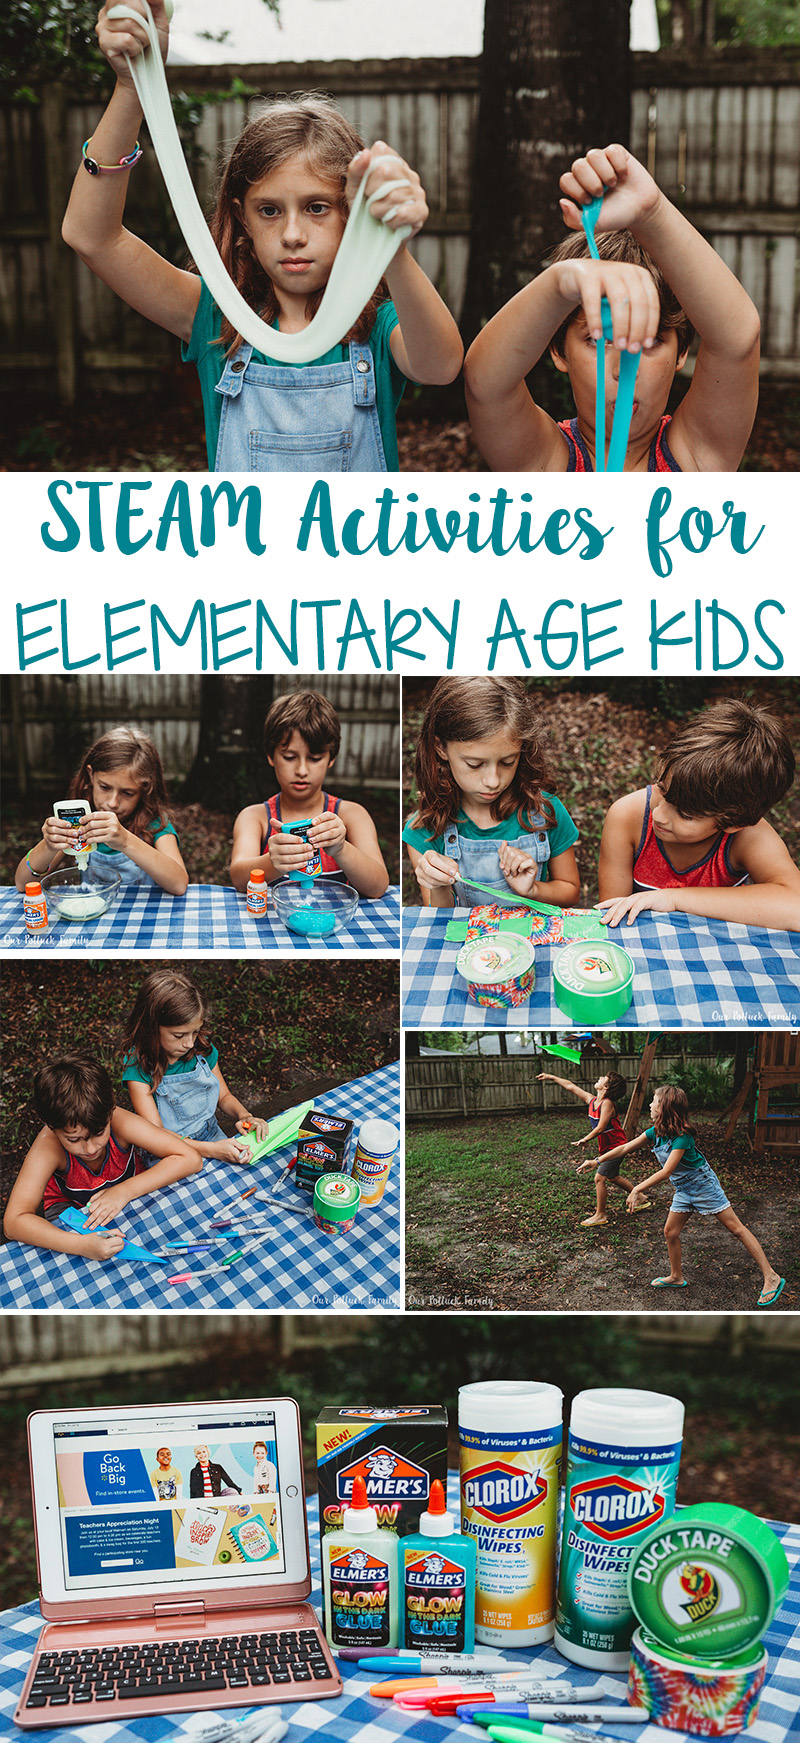 STEAM activities for kids